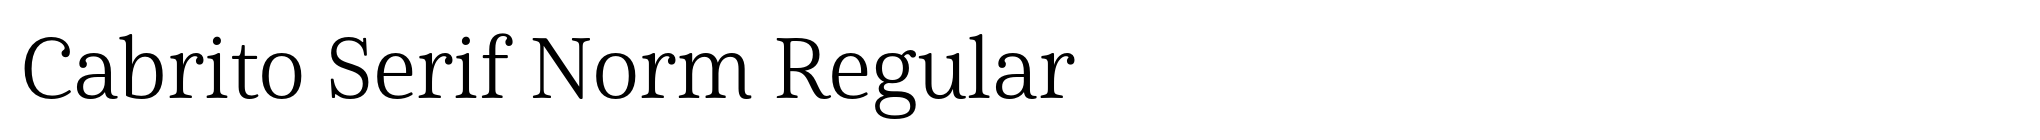 Cabrito Serif Norm Regular image